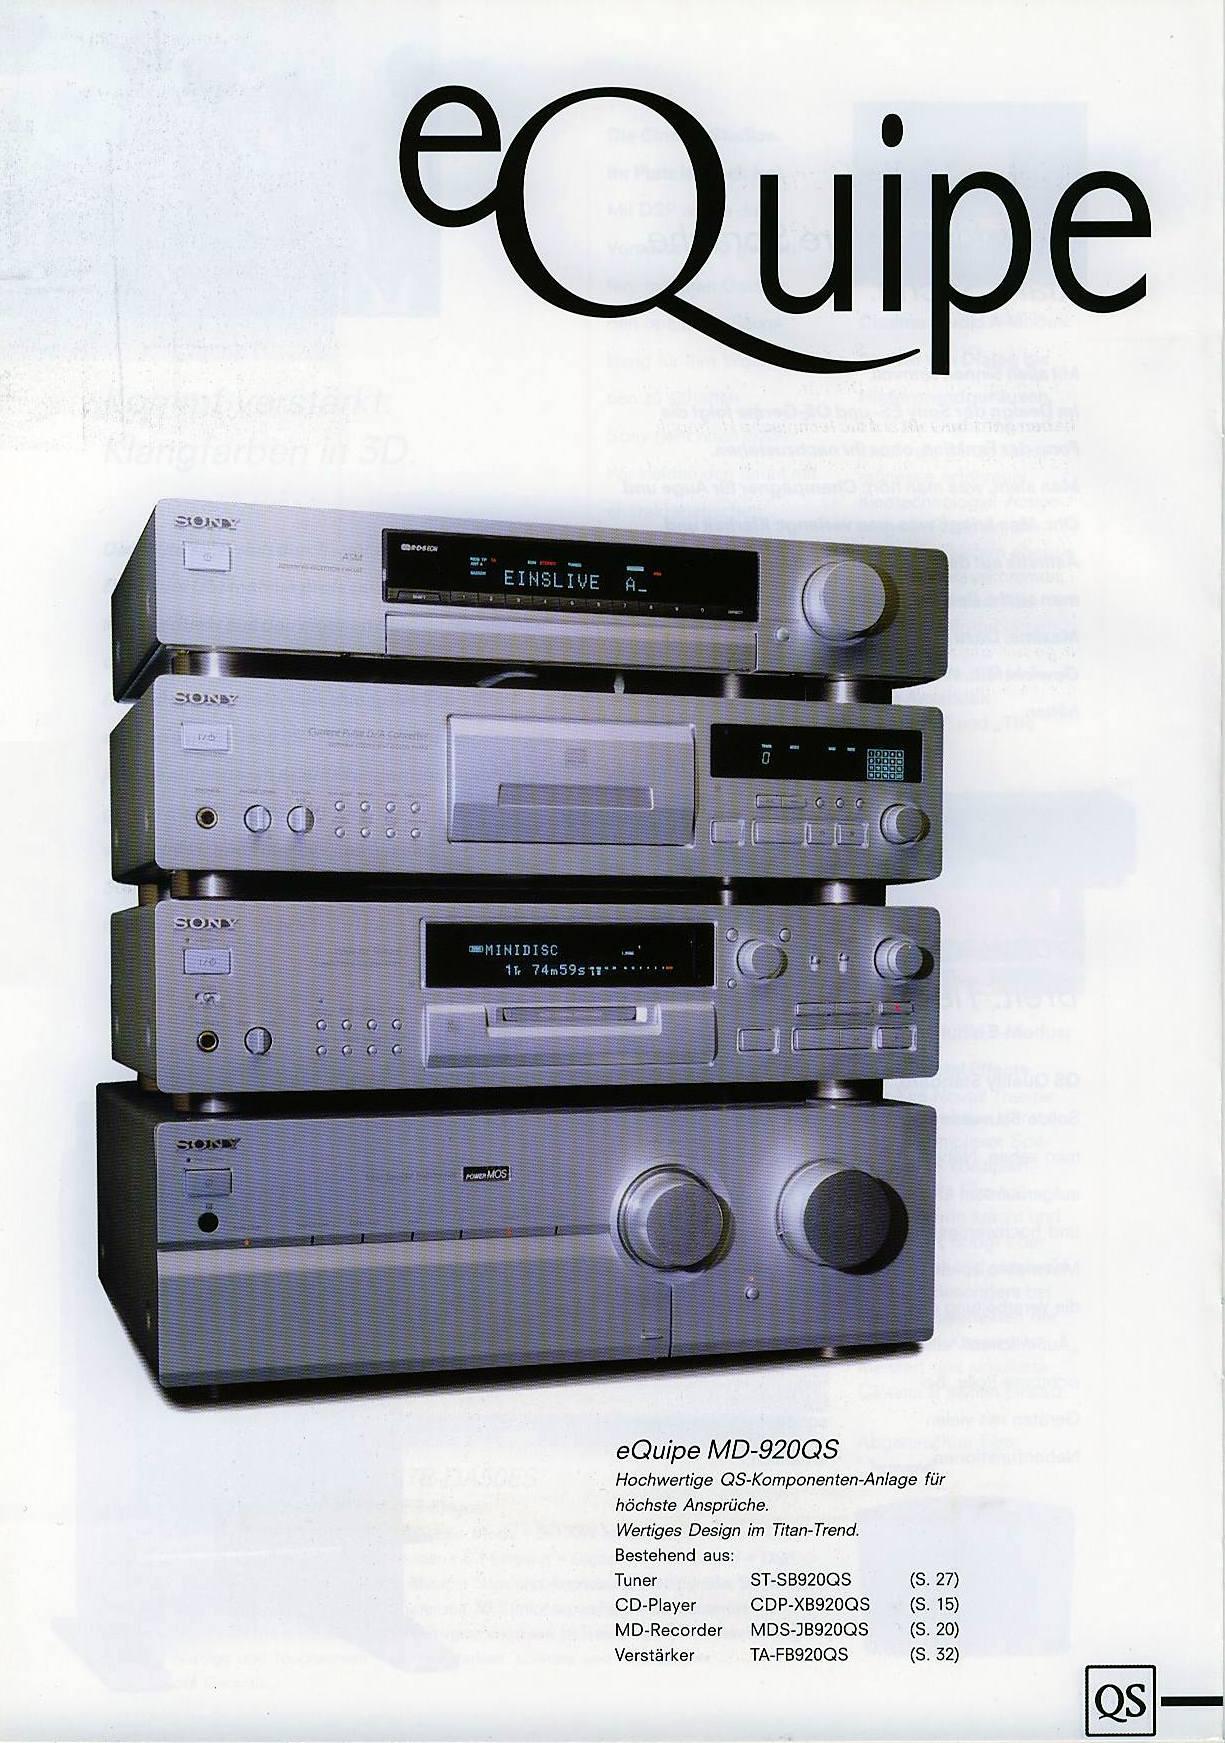 Sony Equipe-Prospekt-1998.jpg